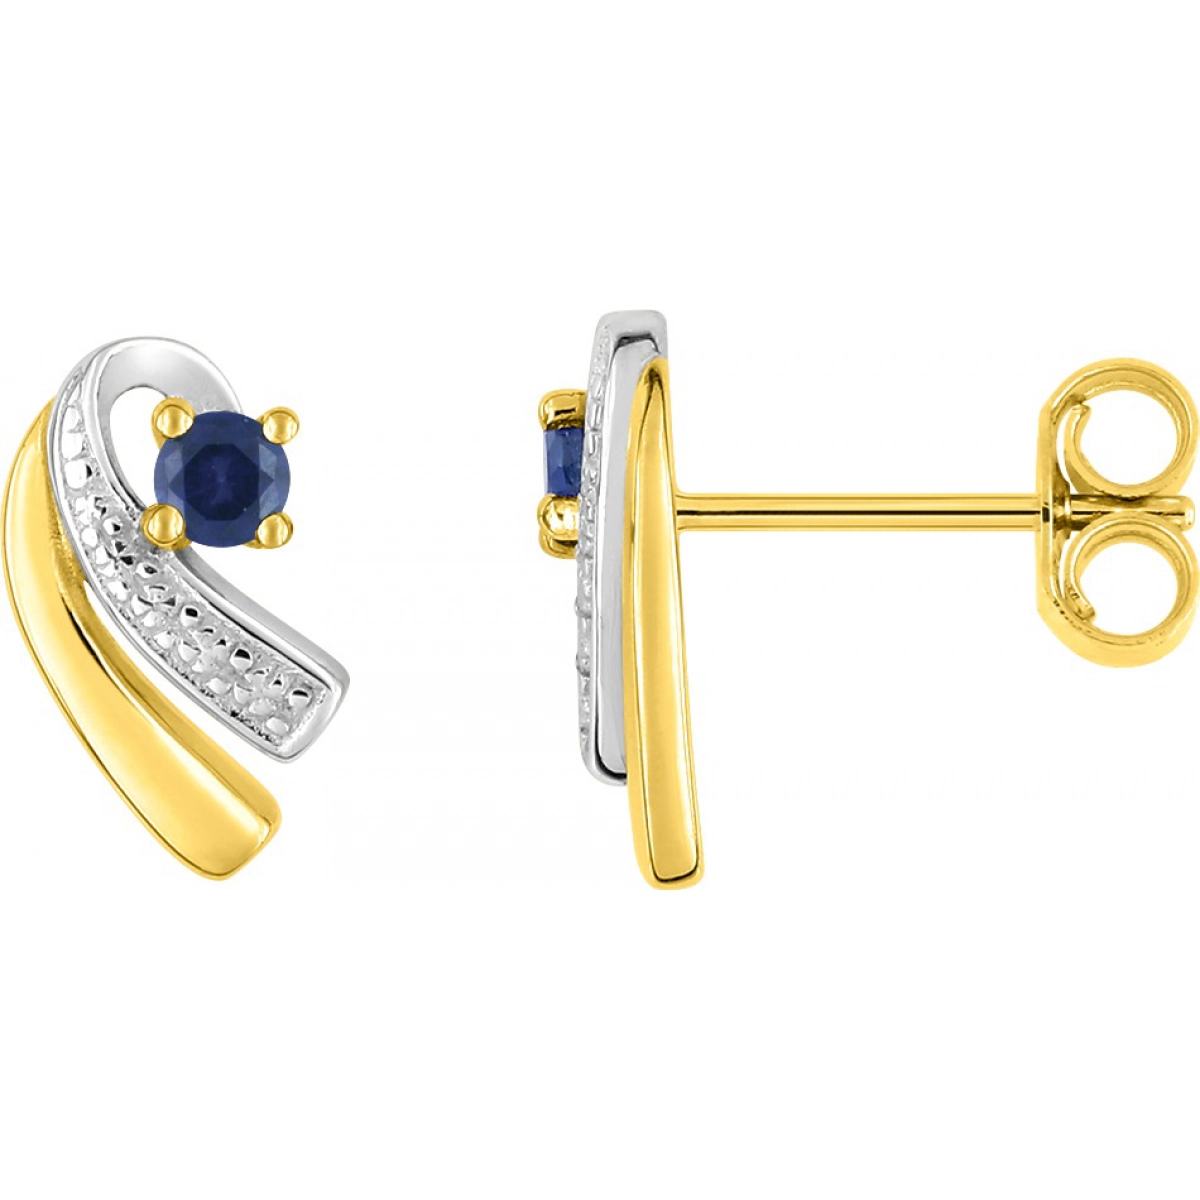 Earrings pair w. sapphire rhod 9K YG Lua Blanca  297130.S3.0